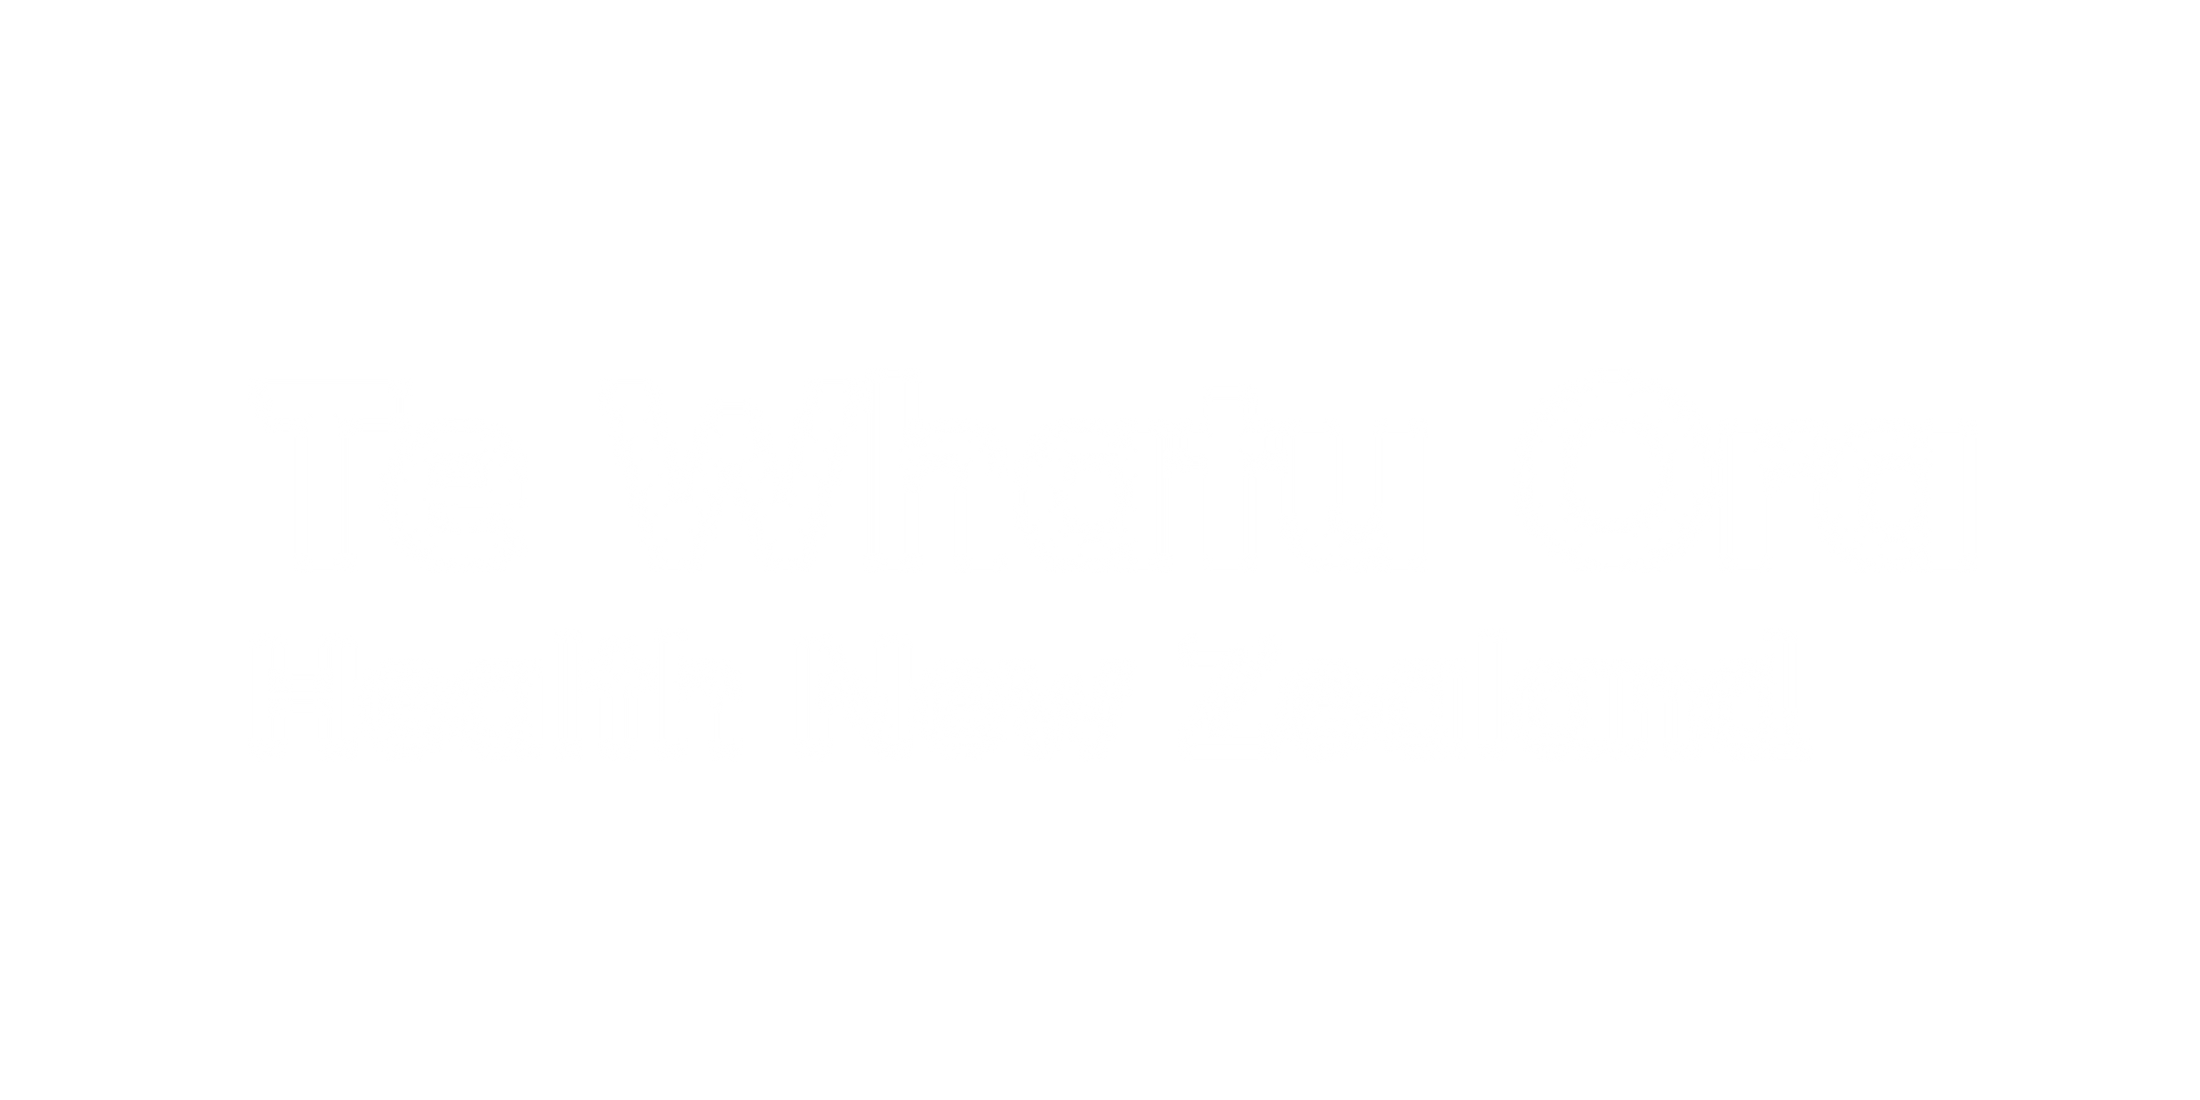 Te Whatu Ora Logo